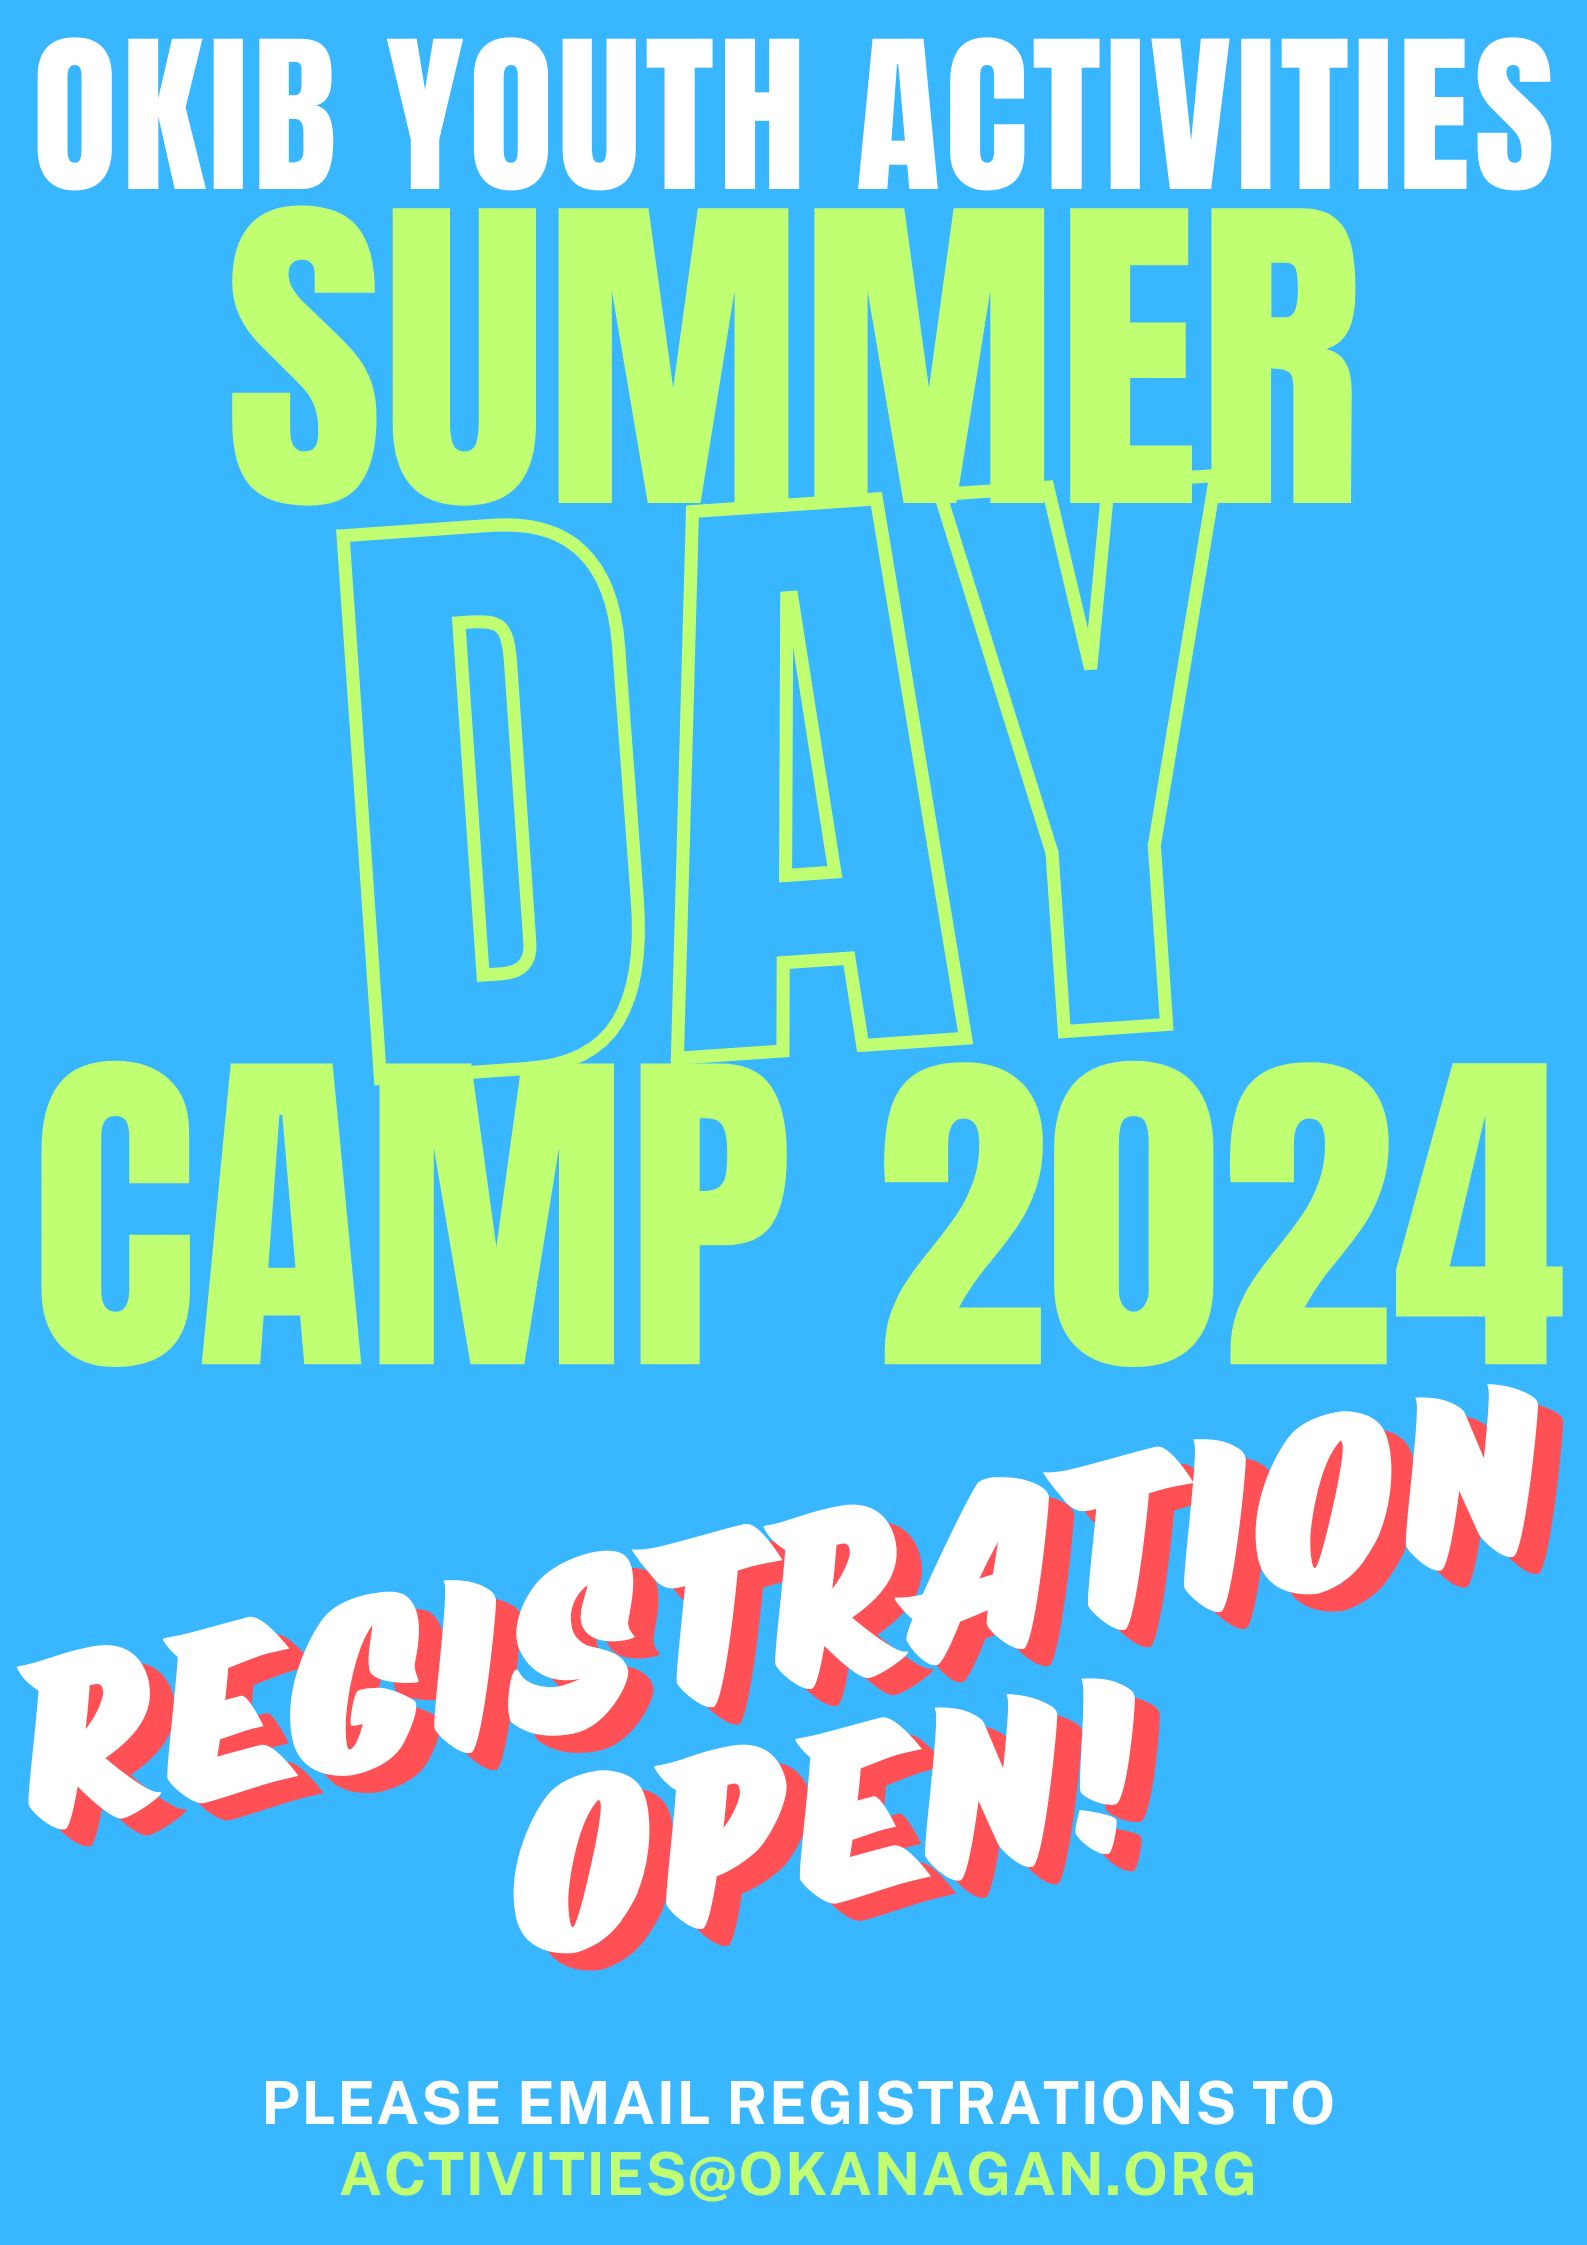 OKIB Summer Day camp 2024 registration